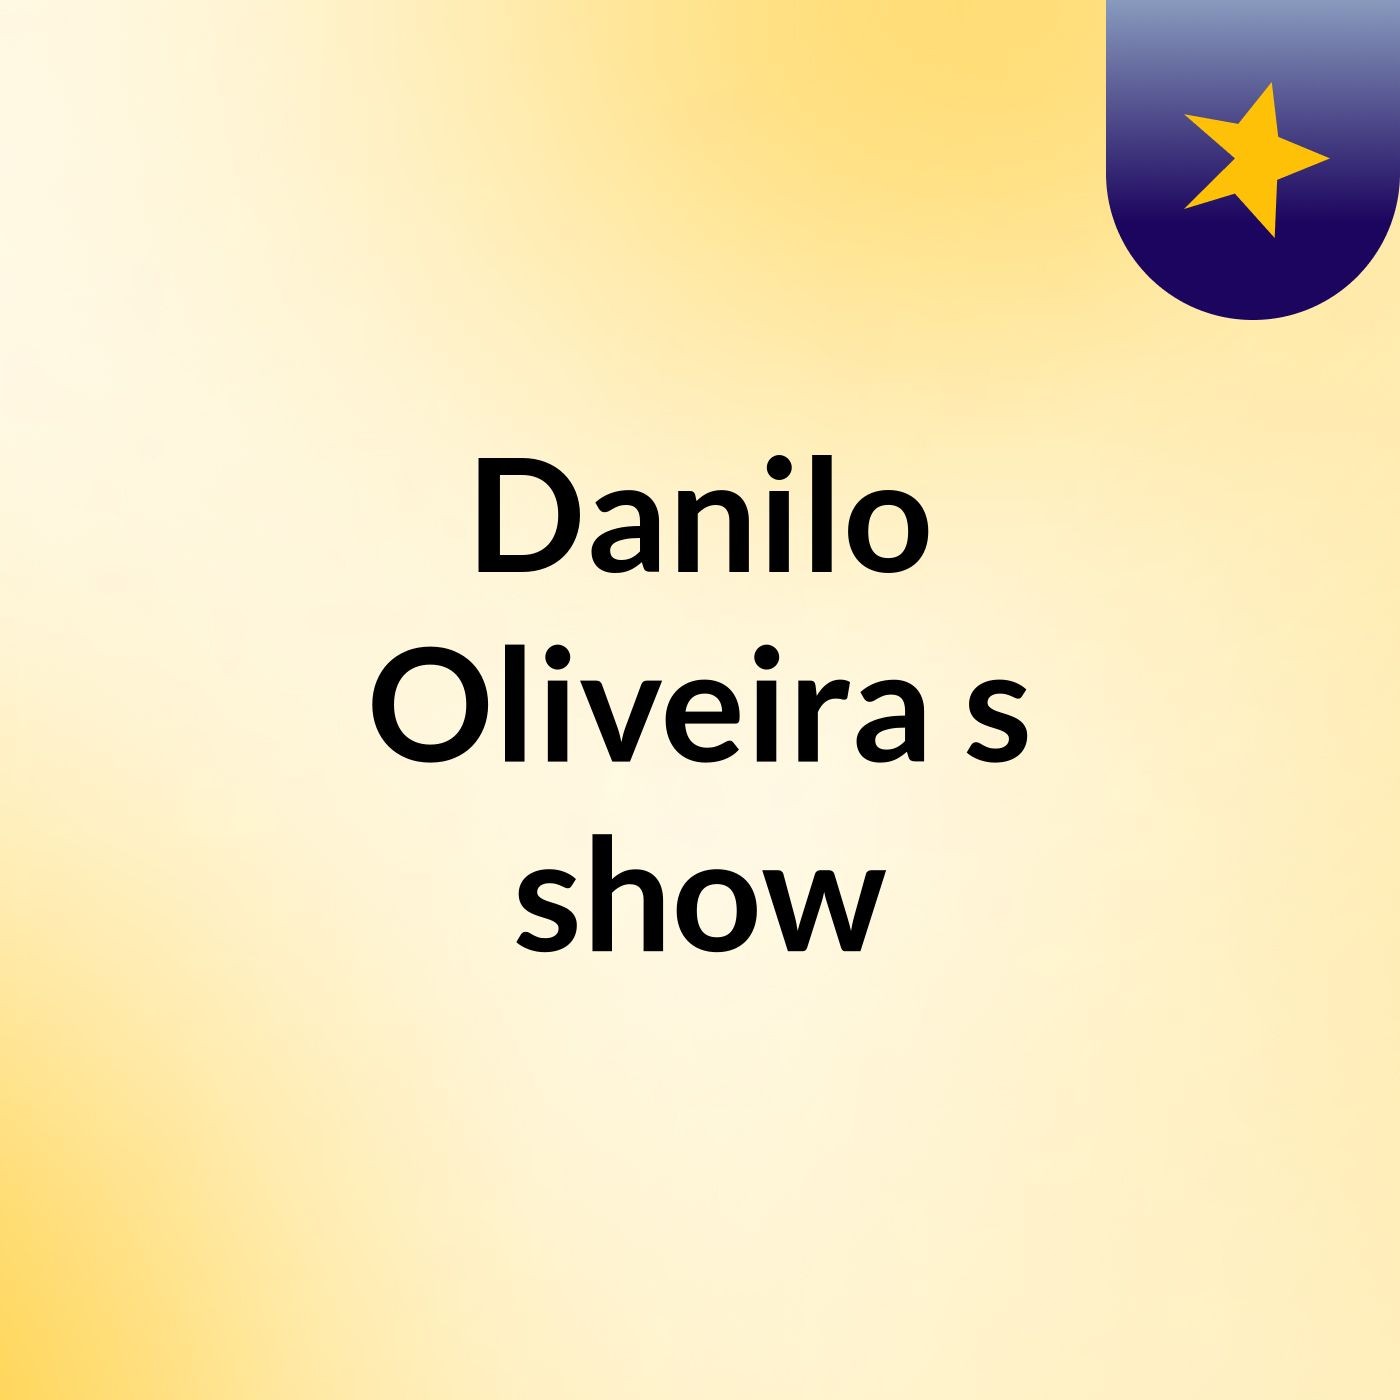 Danilo Oliveira's show